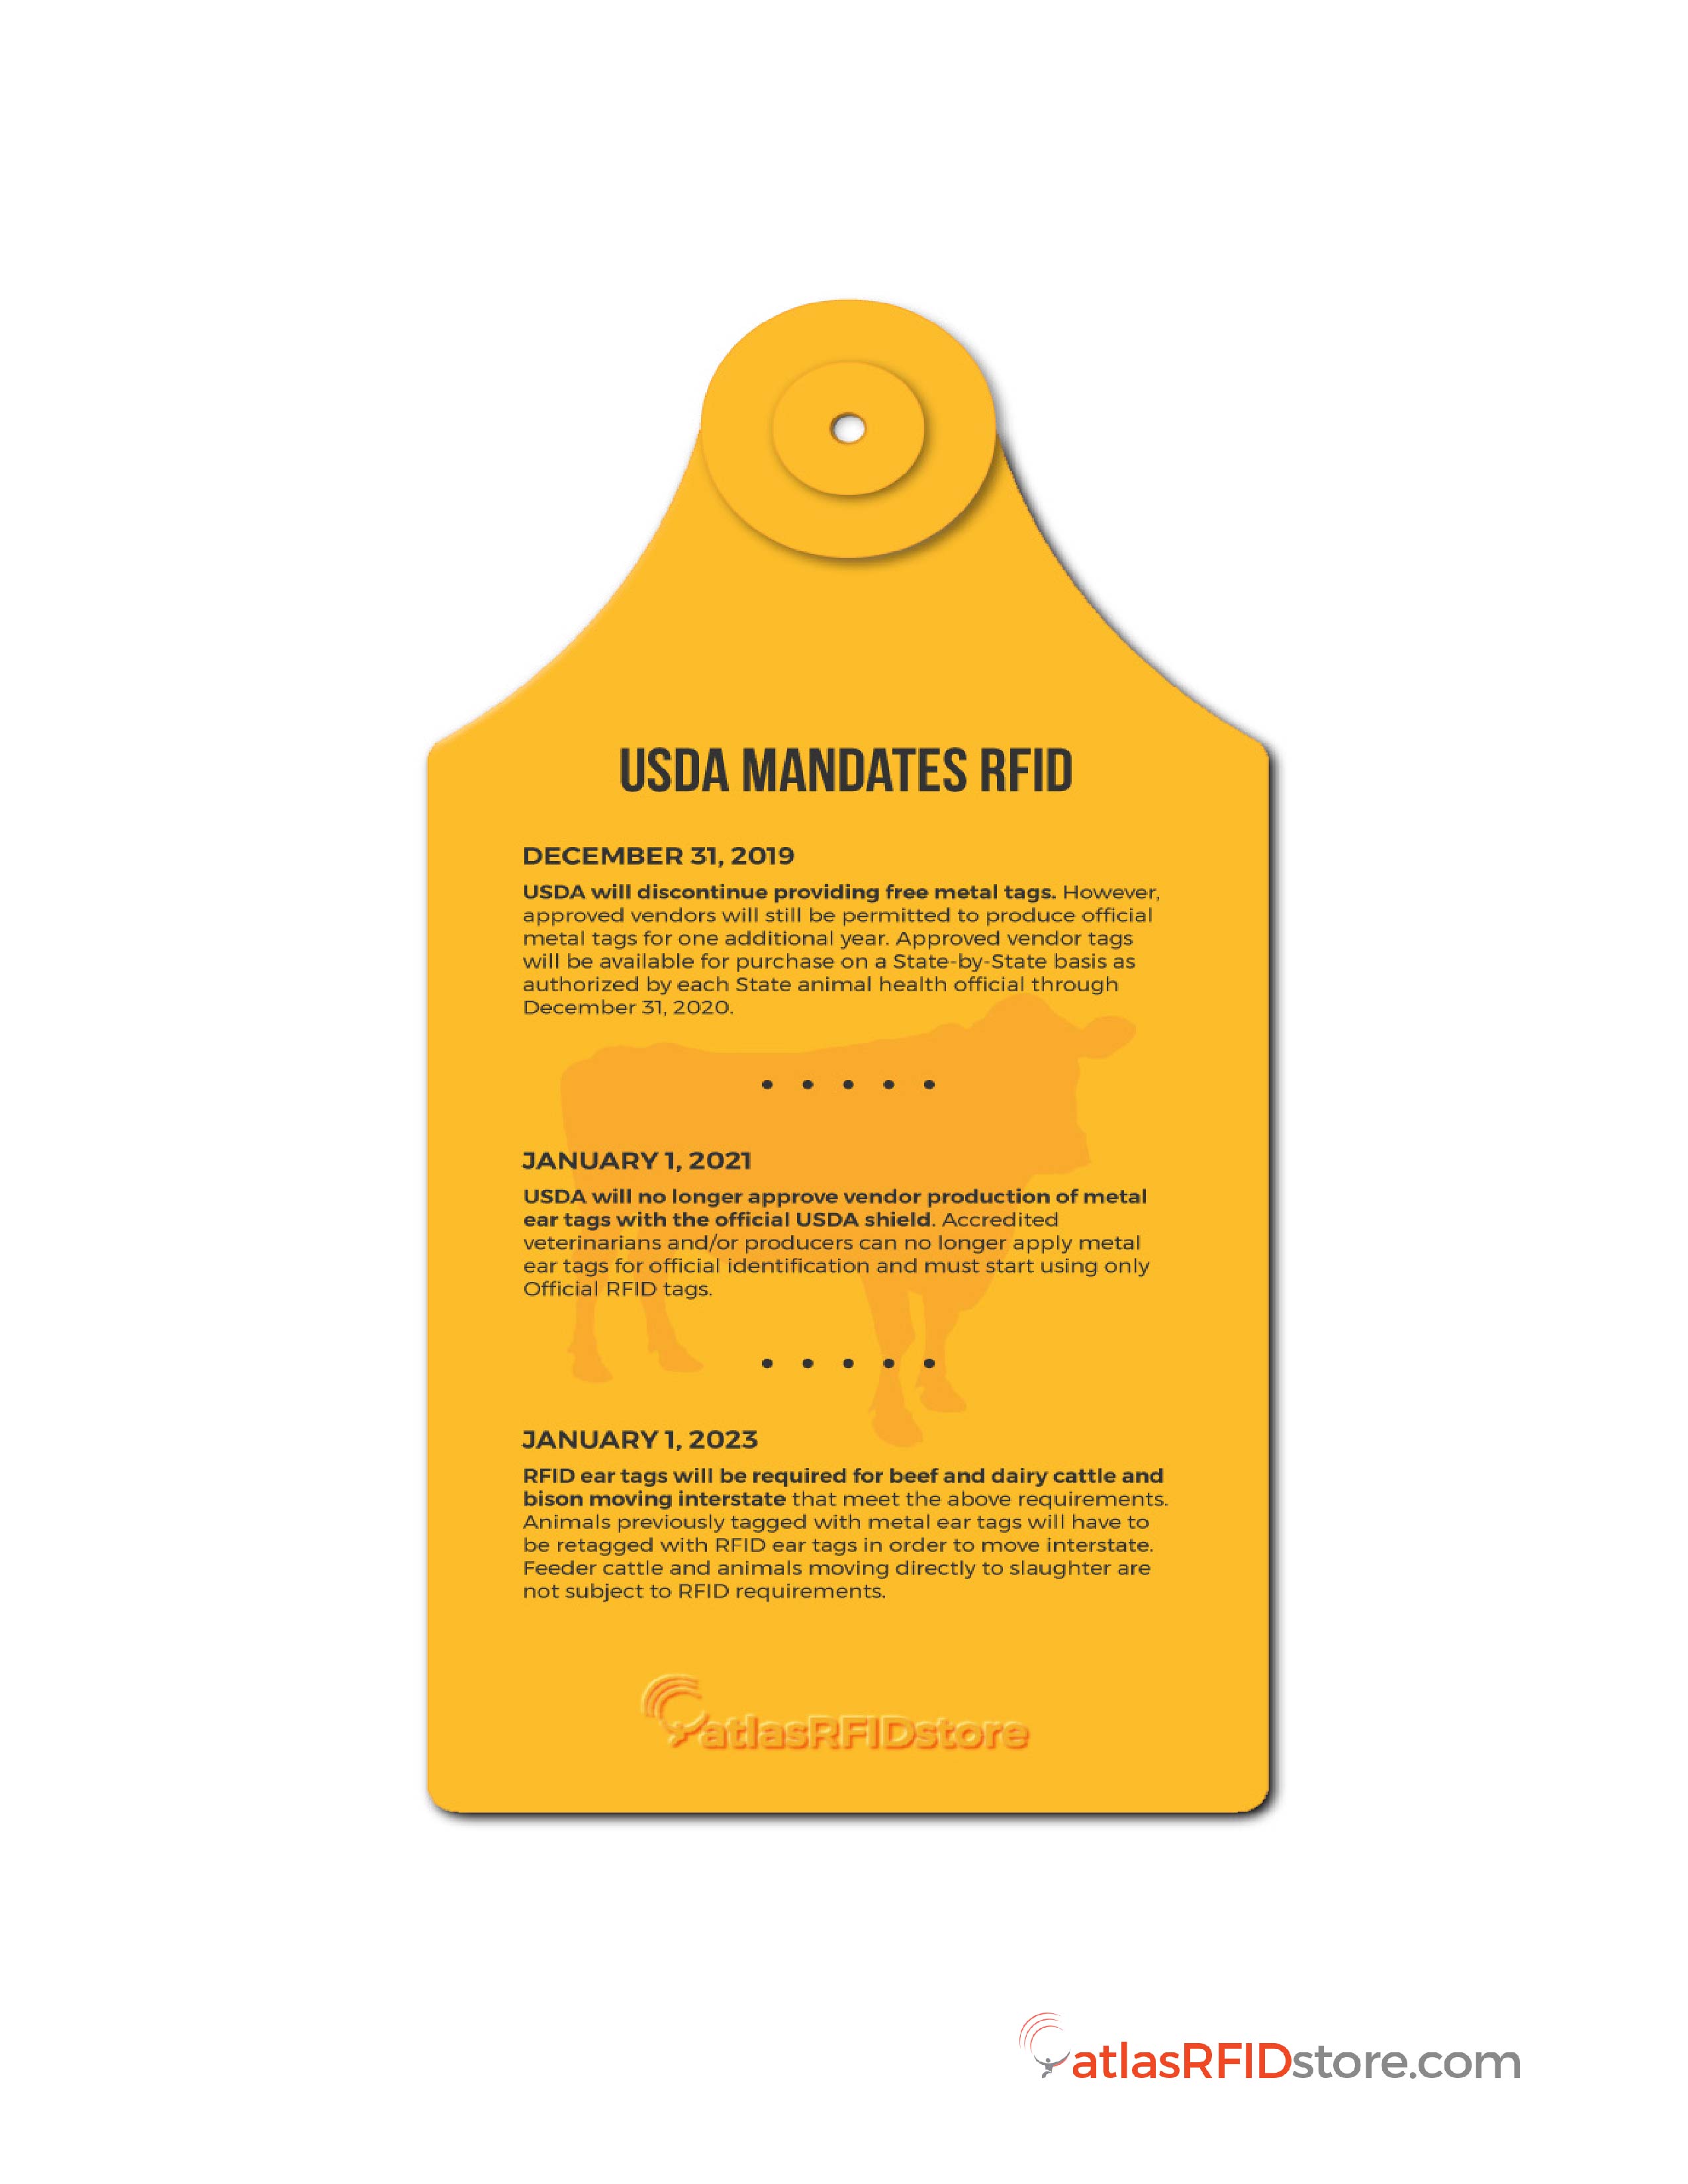 USDA RFID Mandates - Infographic